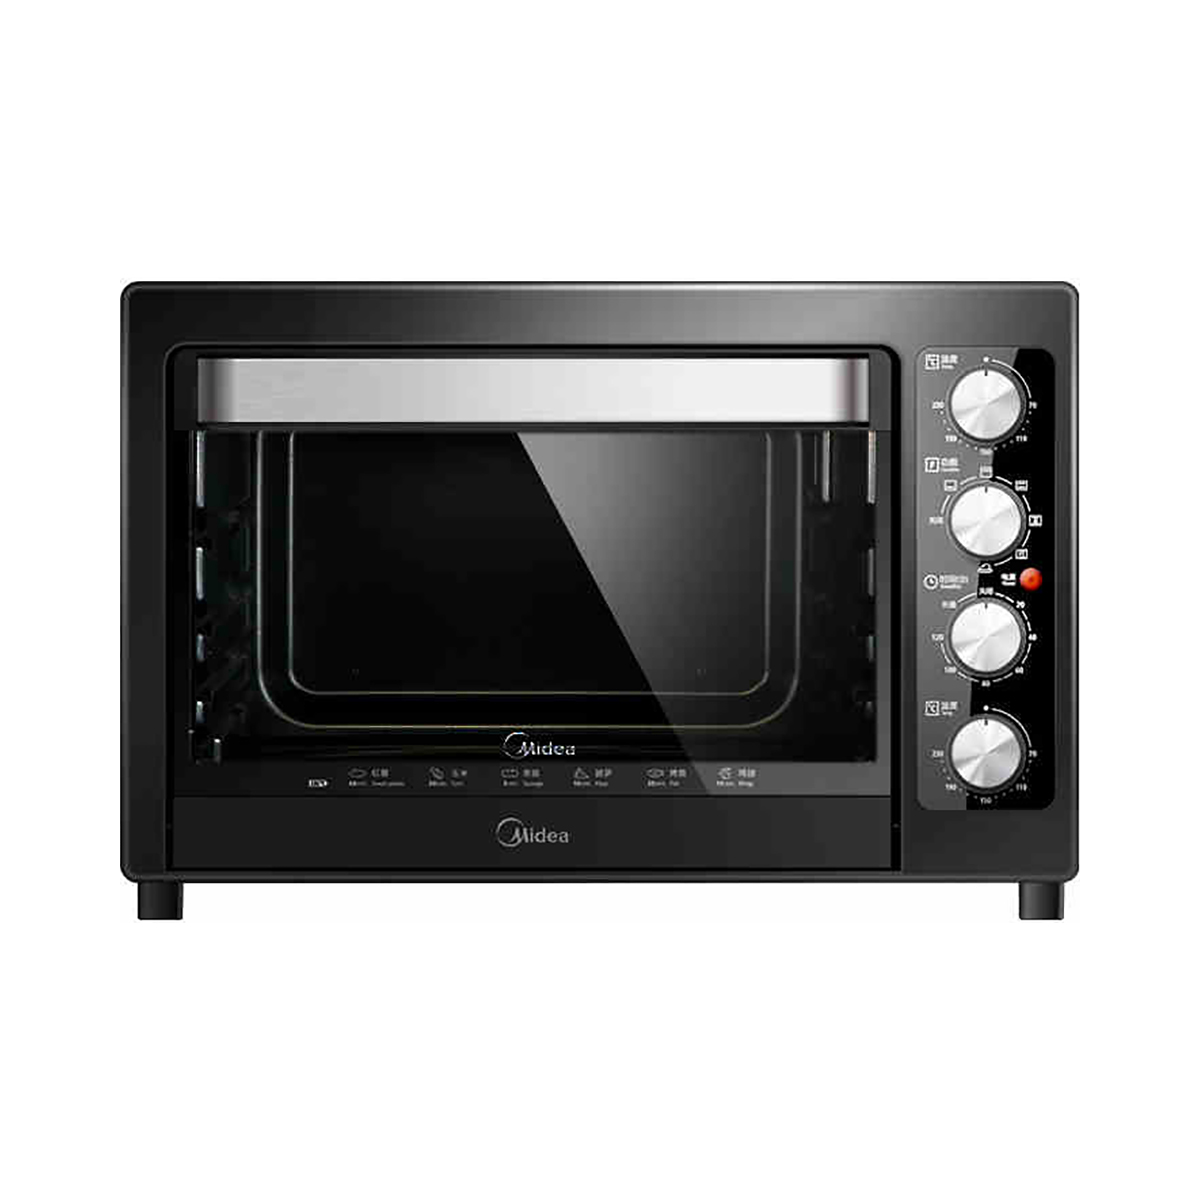 Midea/美的 T3-L385B黑色电烤箱 说明书.pdf